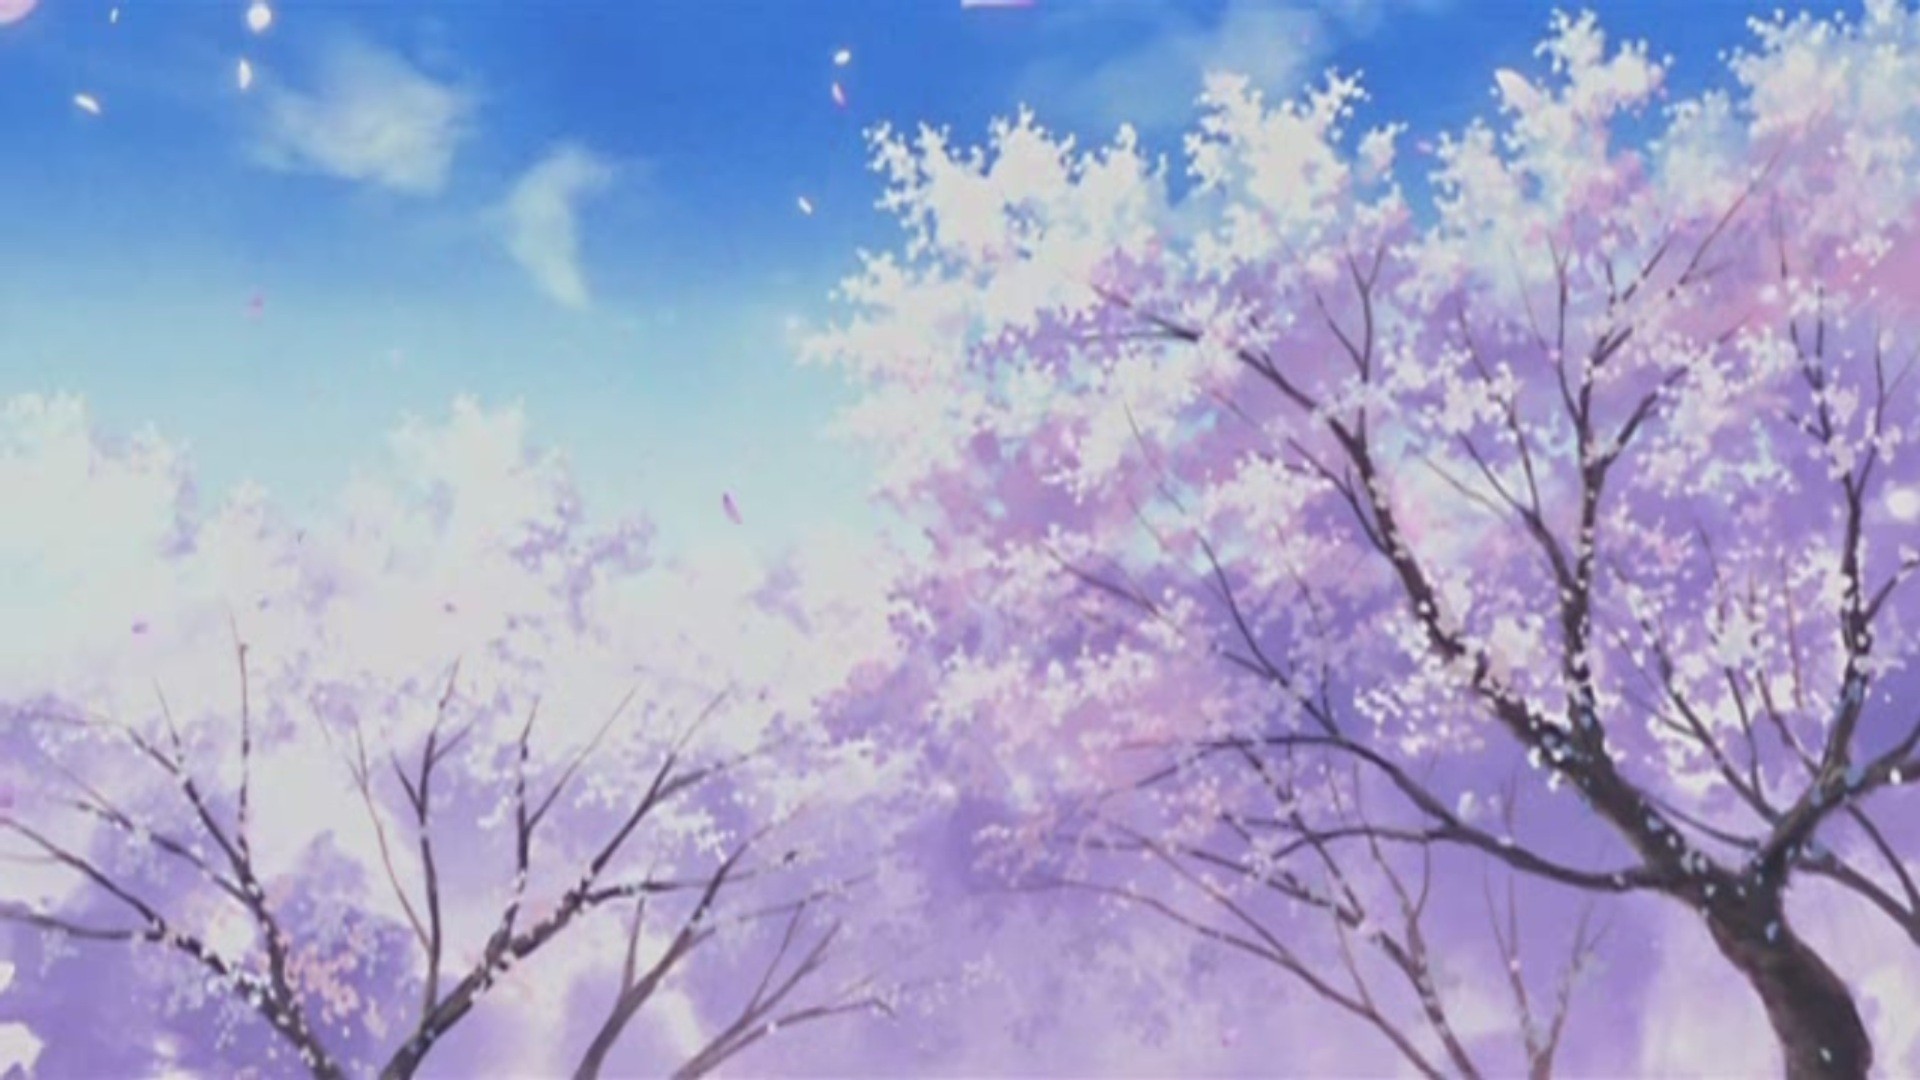 Dark Anime background Scenery ·① Download free stunning ...